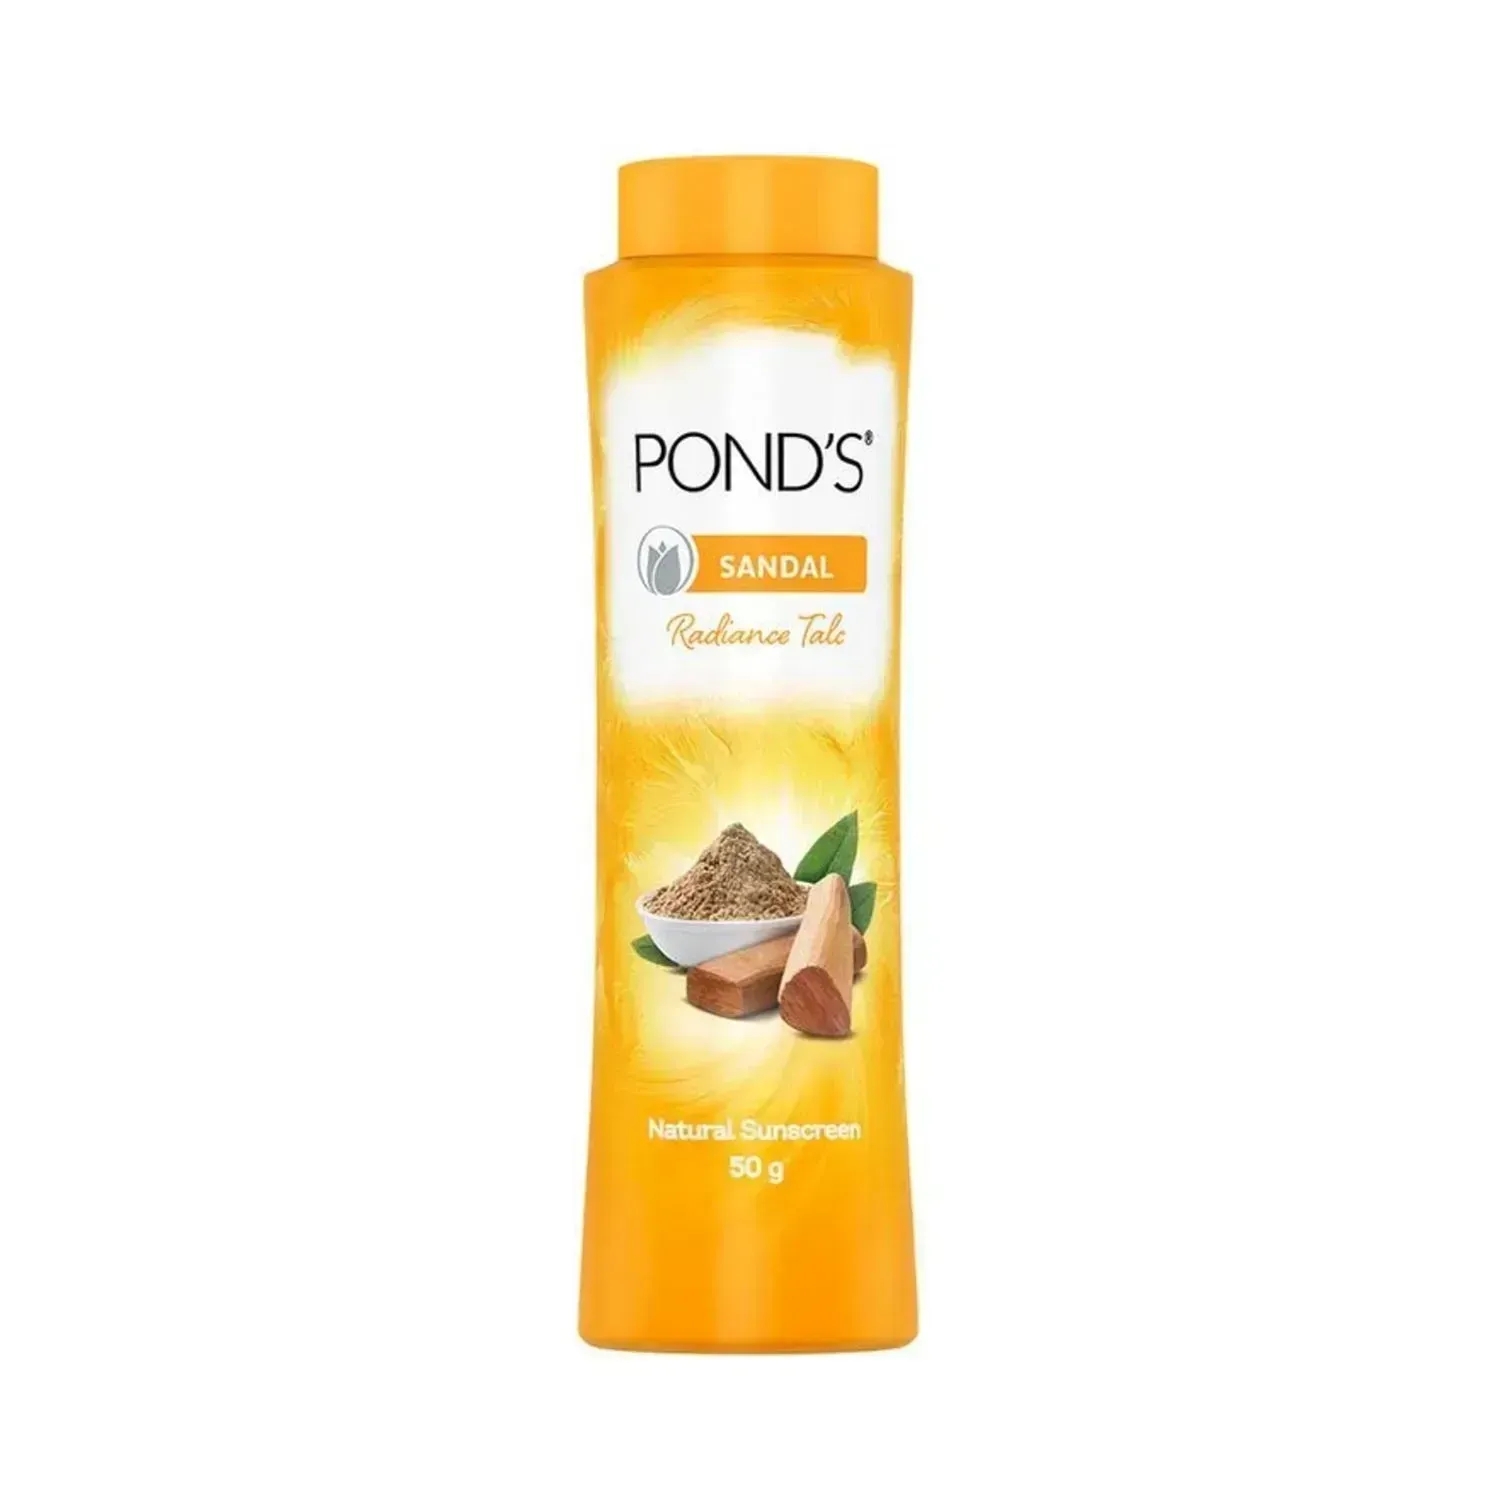 Pond's | Pond's Sandal Radiance Talcum Powder Natural Sunscreen - (50g)